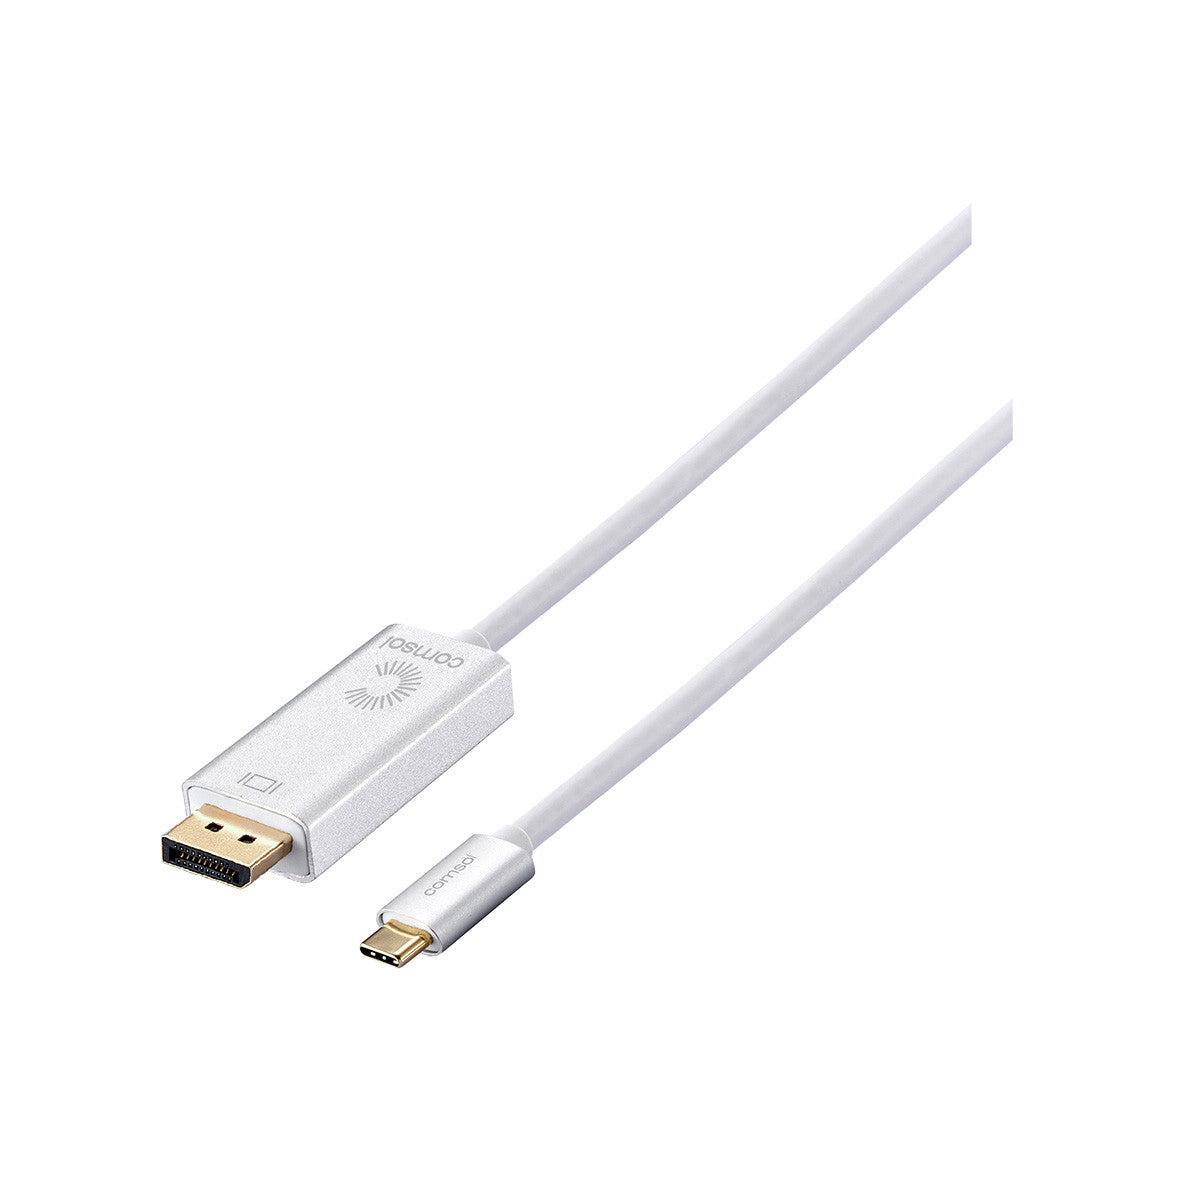 Comsol USB-C to DisplayPort Cable 1.5m